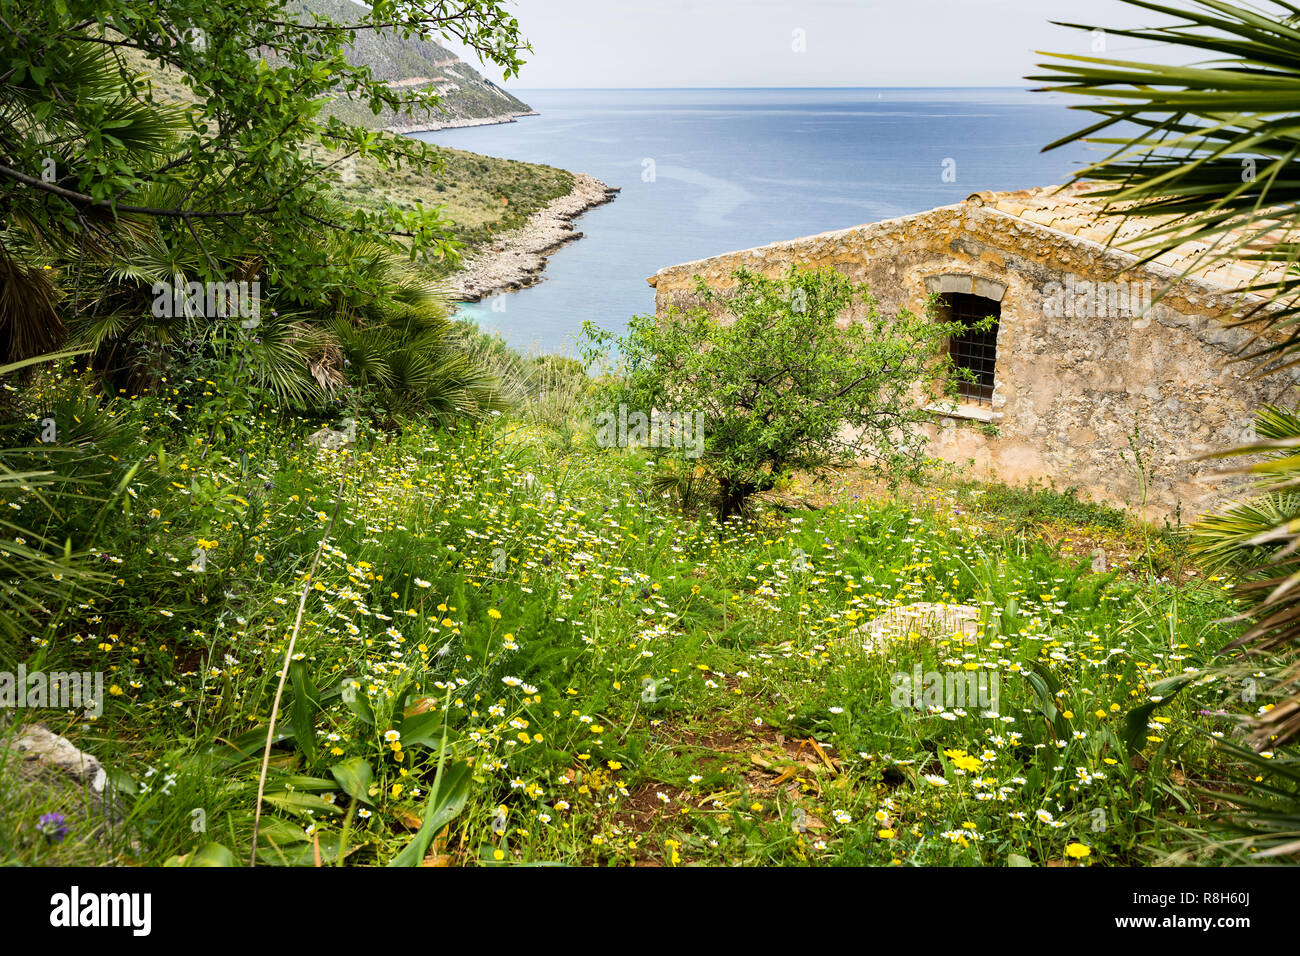 Typical Sicilian house overlooking Mediterranean Sea at Zingaro Nature Reserve, San Vito Lo Capo, Sicily, Italy Stock Photo